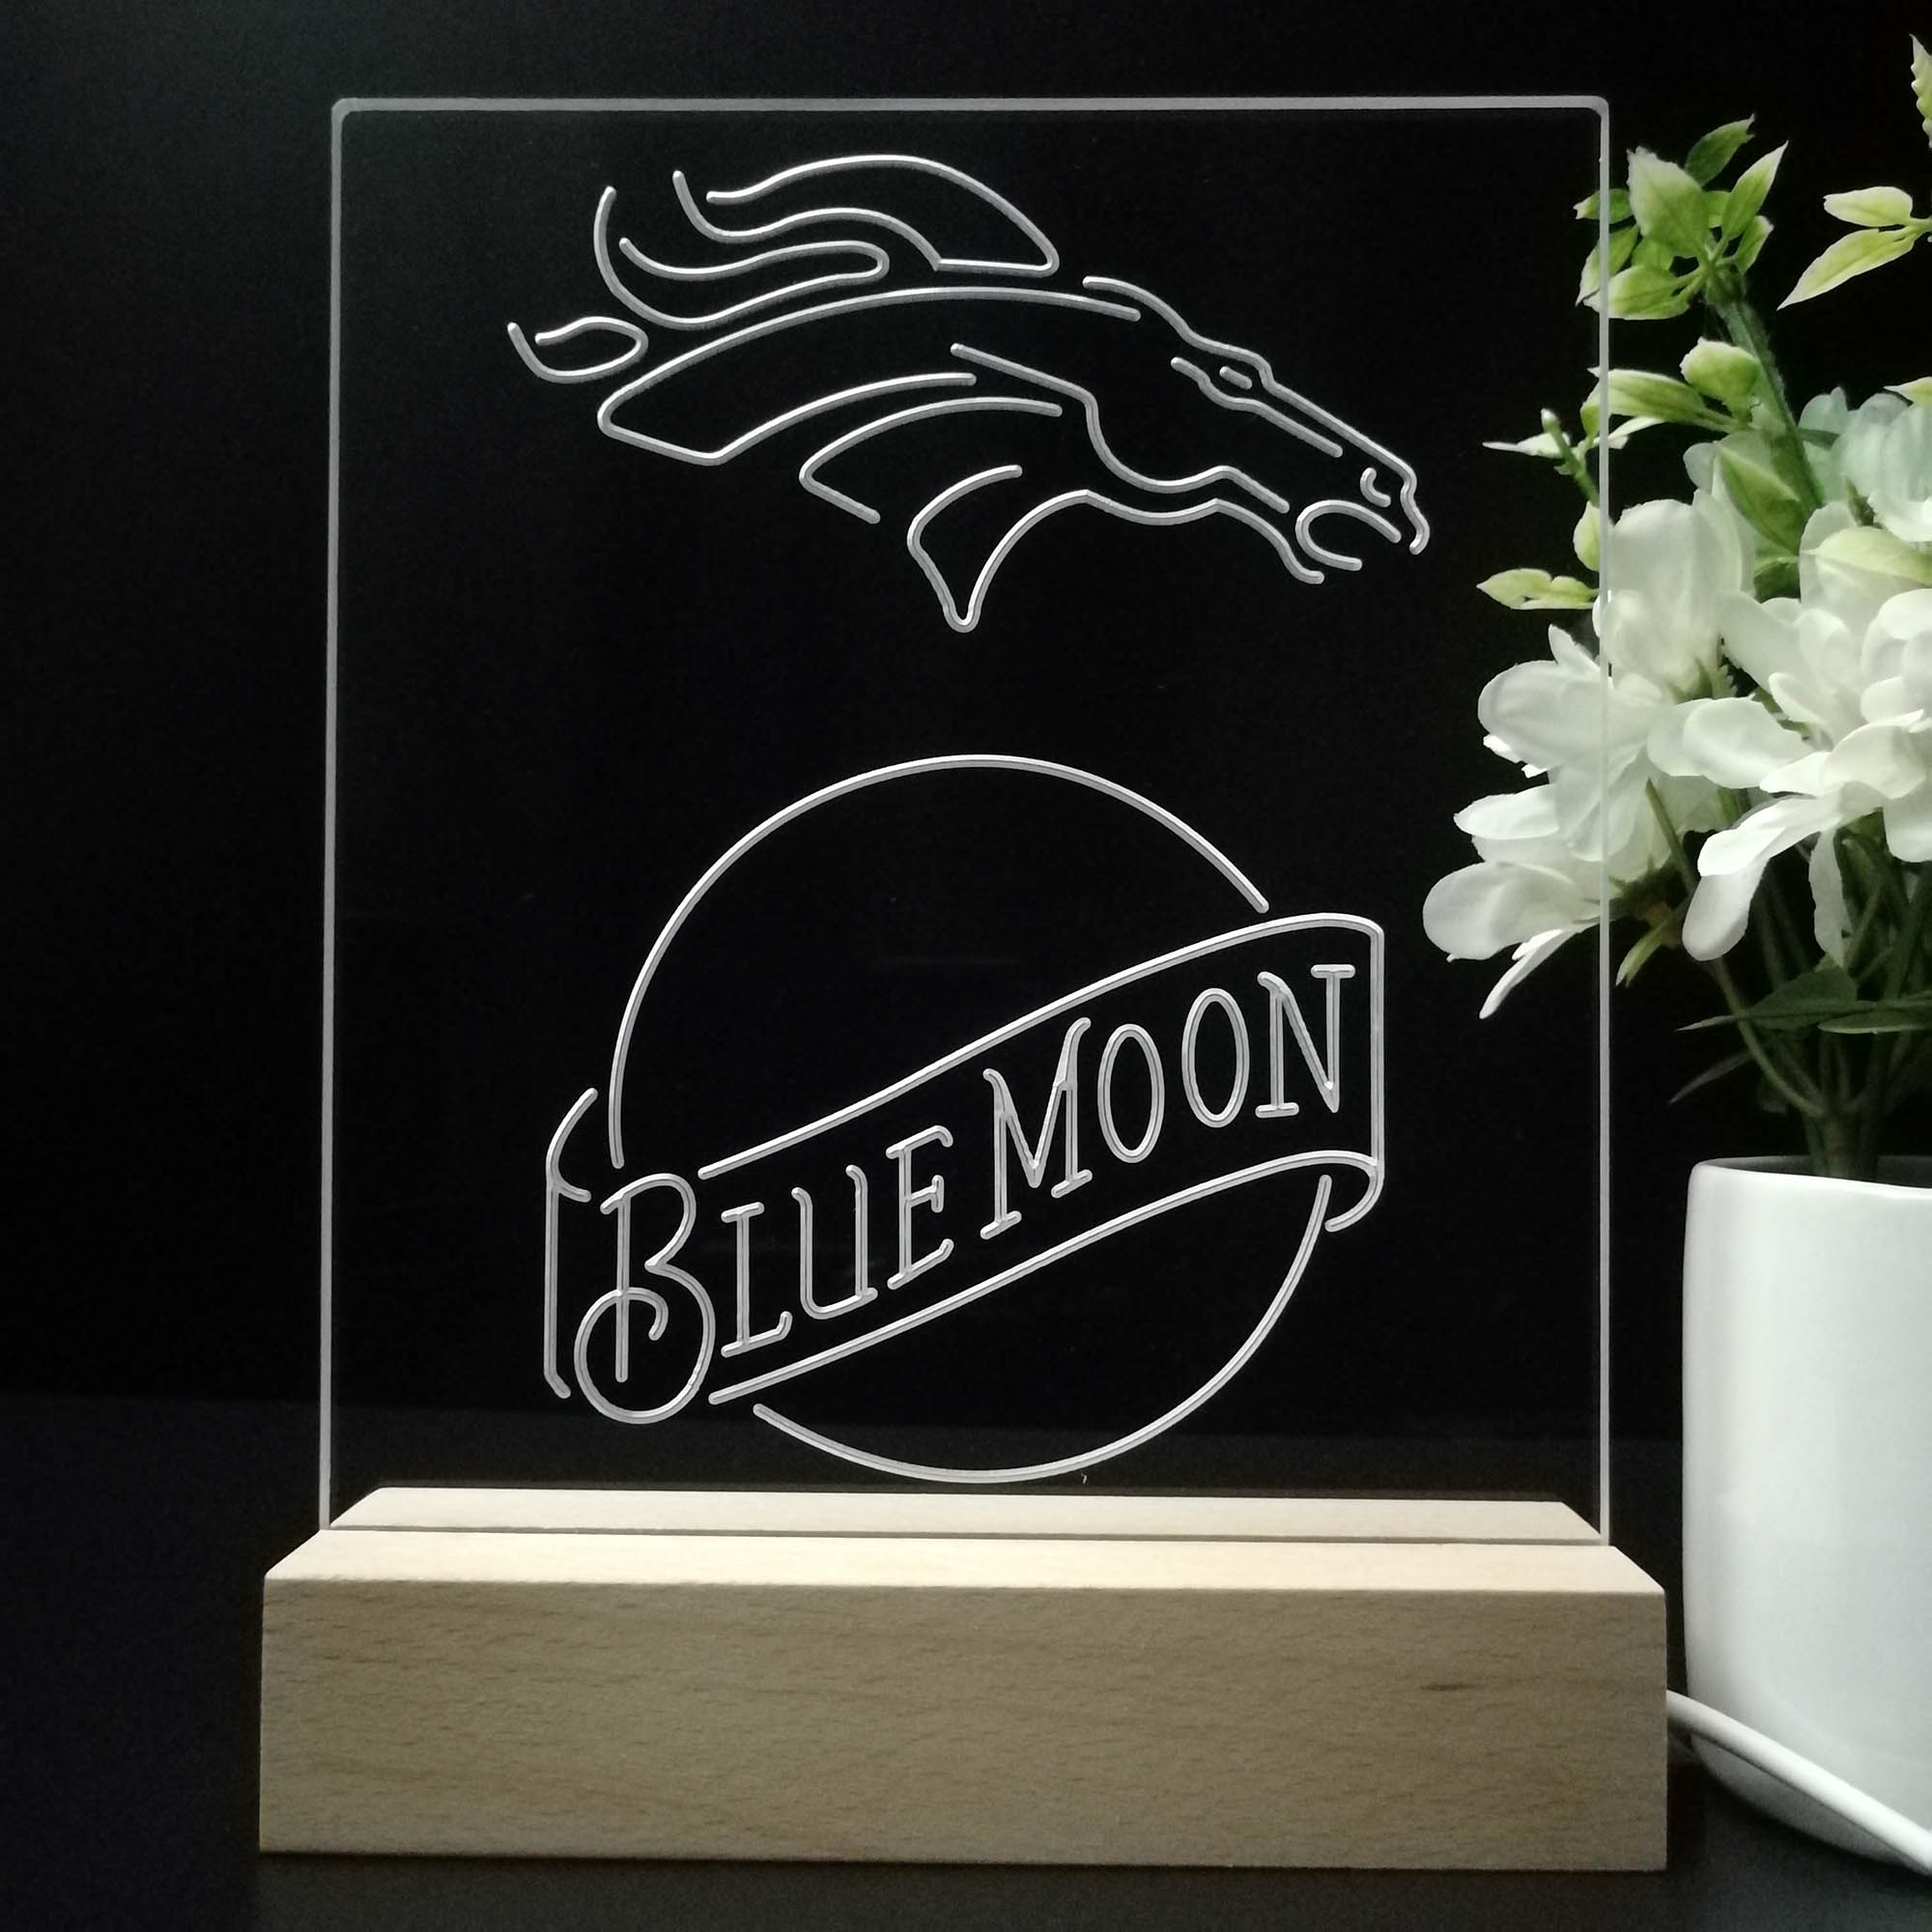 Denver Broncos Blue Moon Neon Sign Pub Bar Lamp